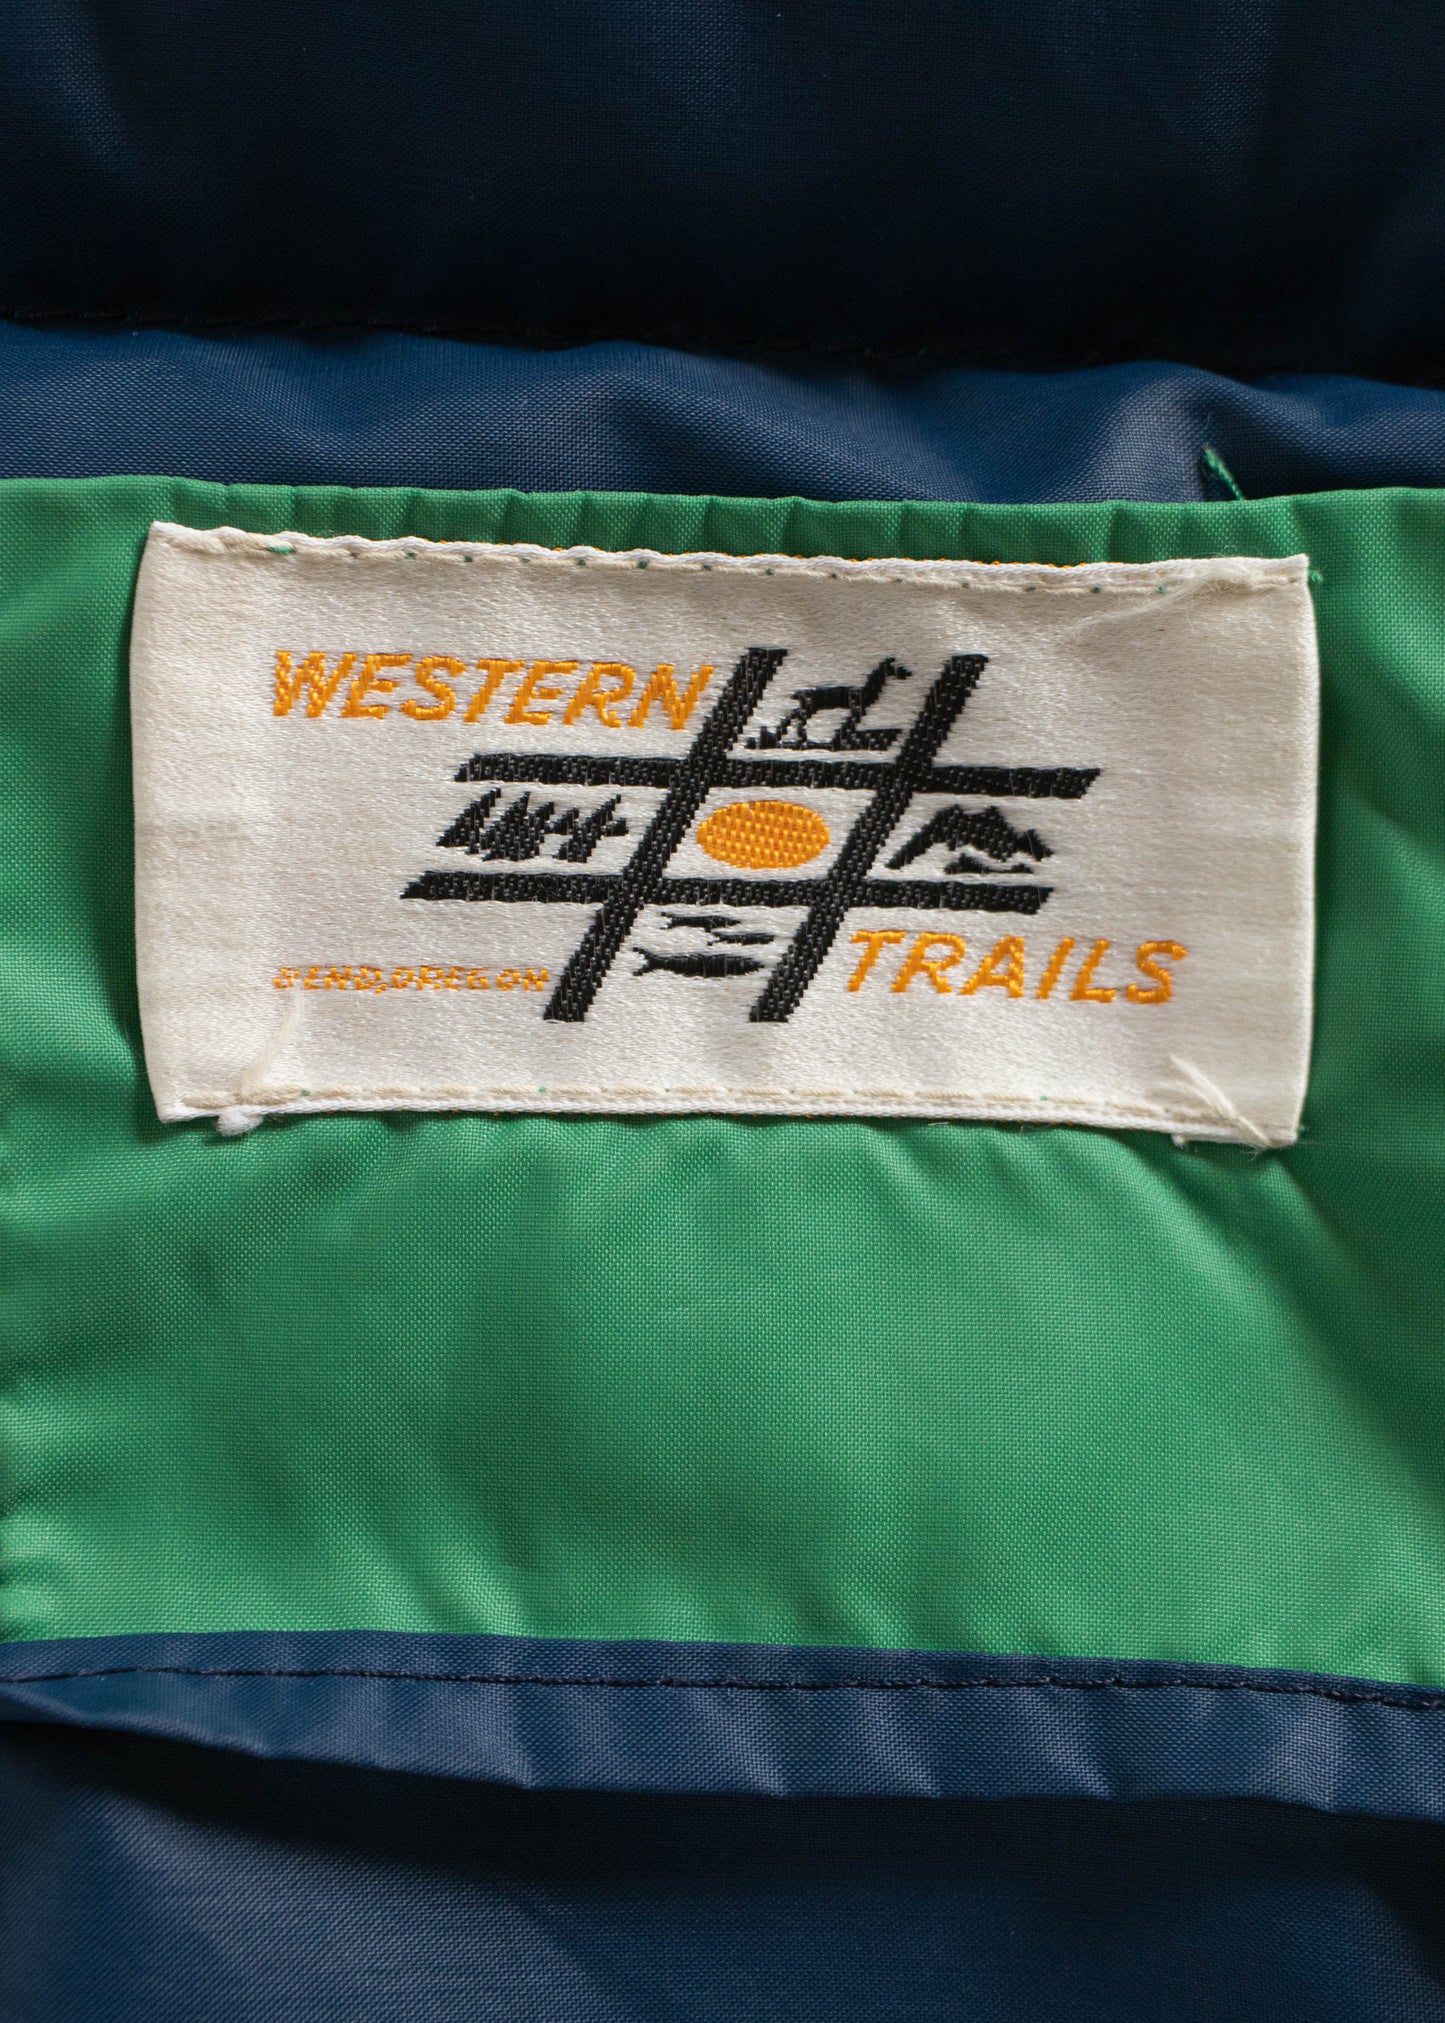 1980s Western Trails Reversible Down Puffer Vest Size M/L